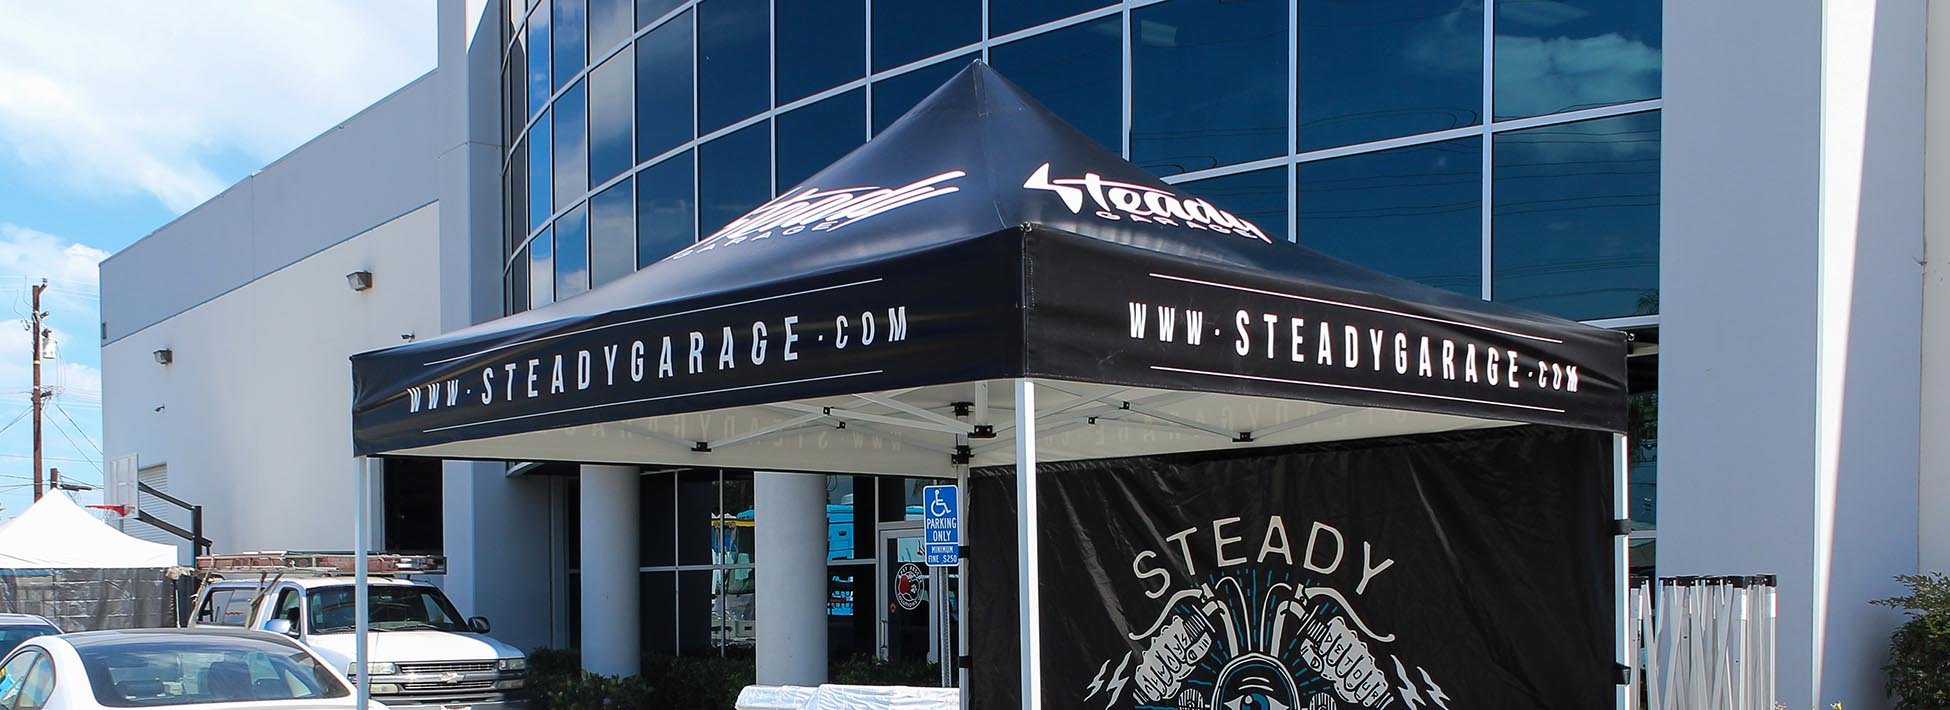 steady-garage-canopy.jpg